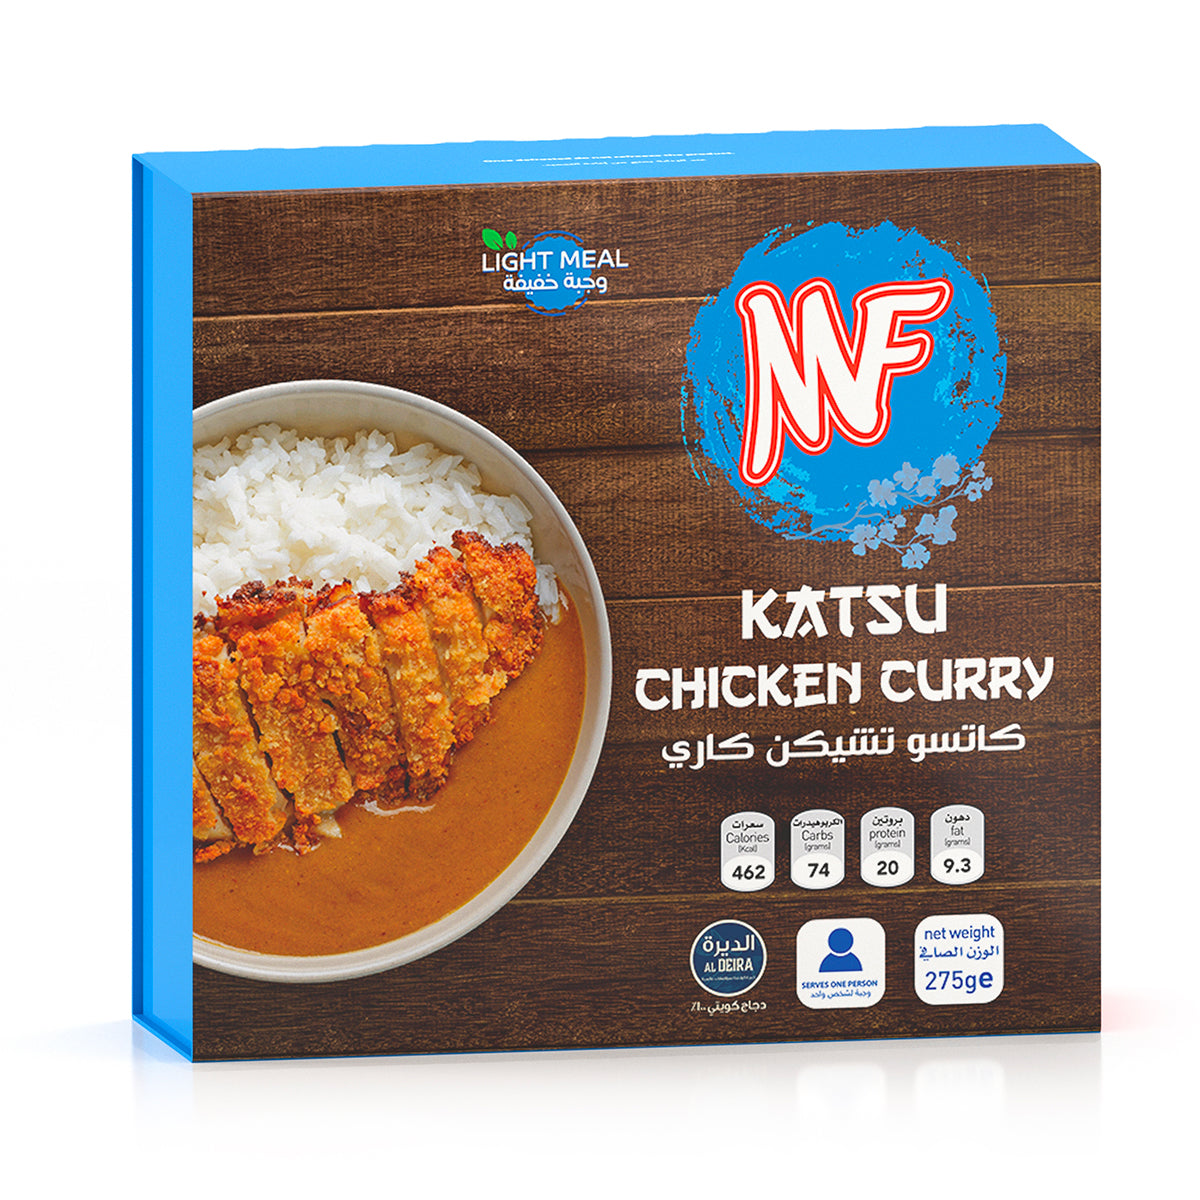 MF Katsu Chicken Curry 275g (Light Meal)